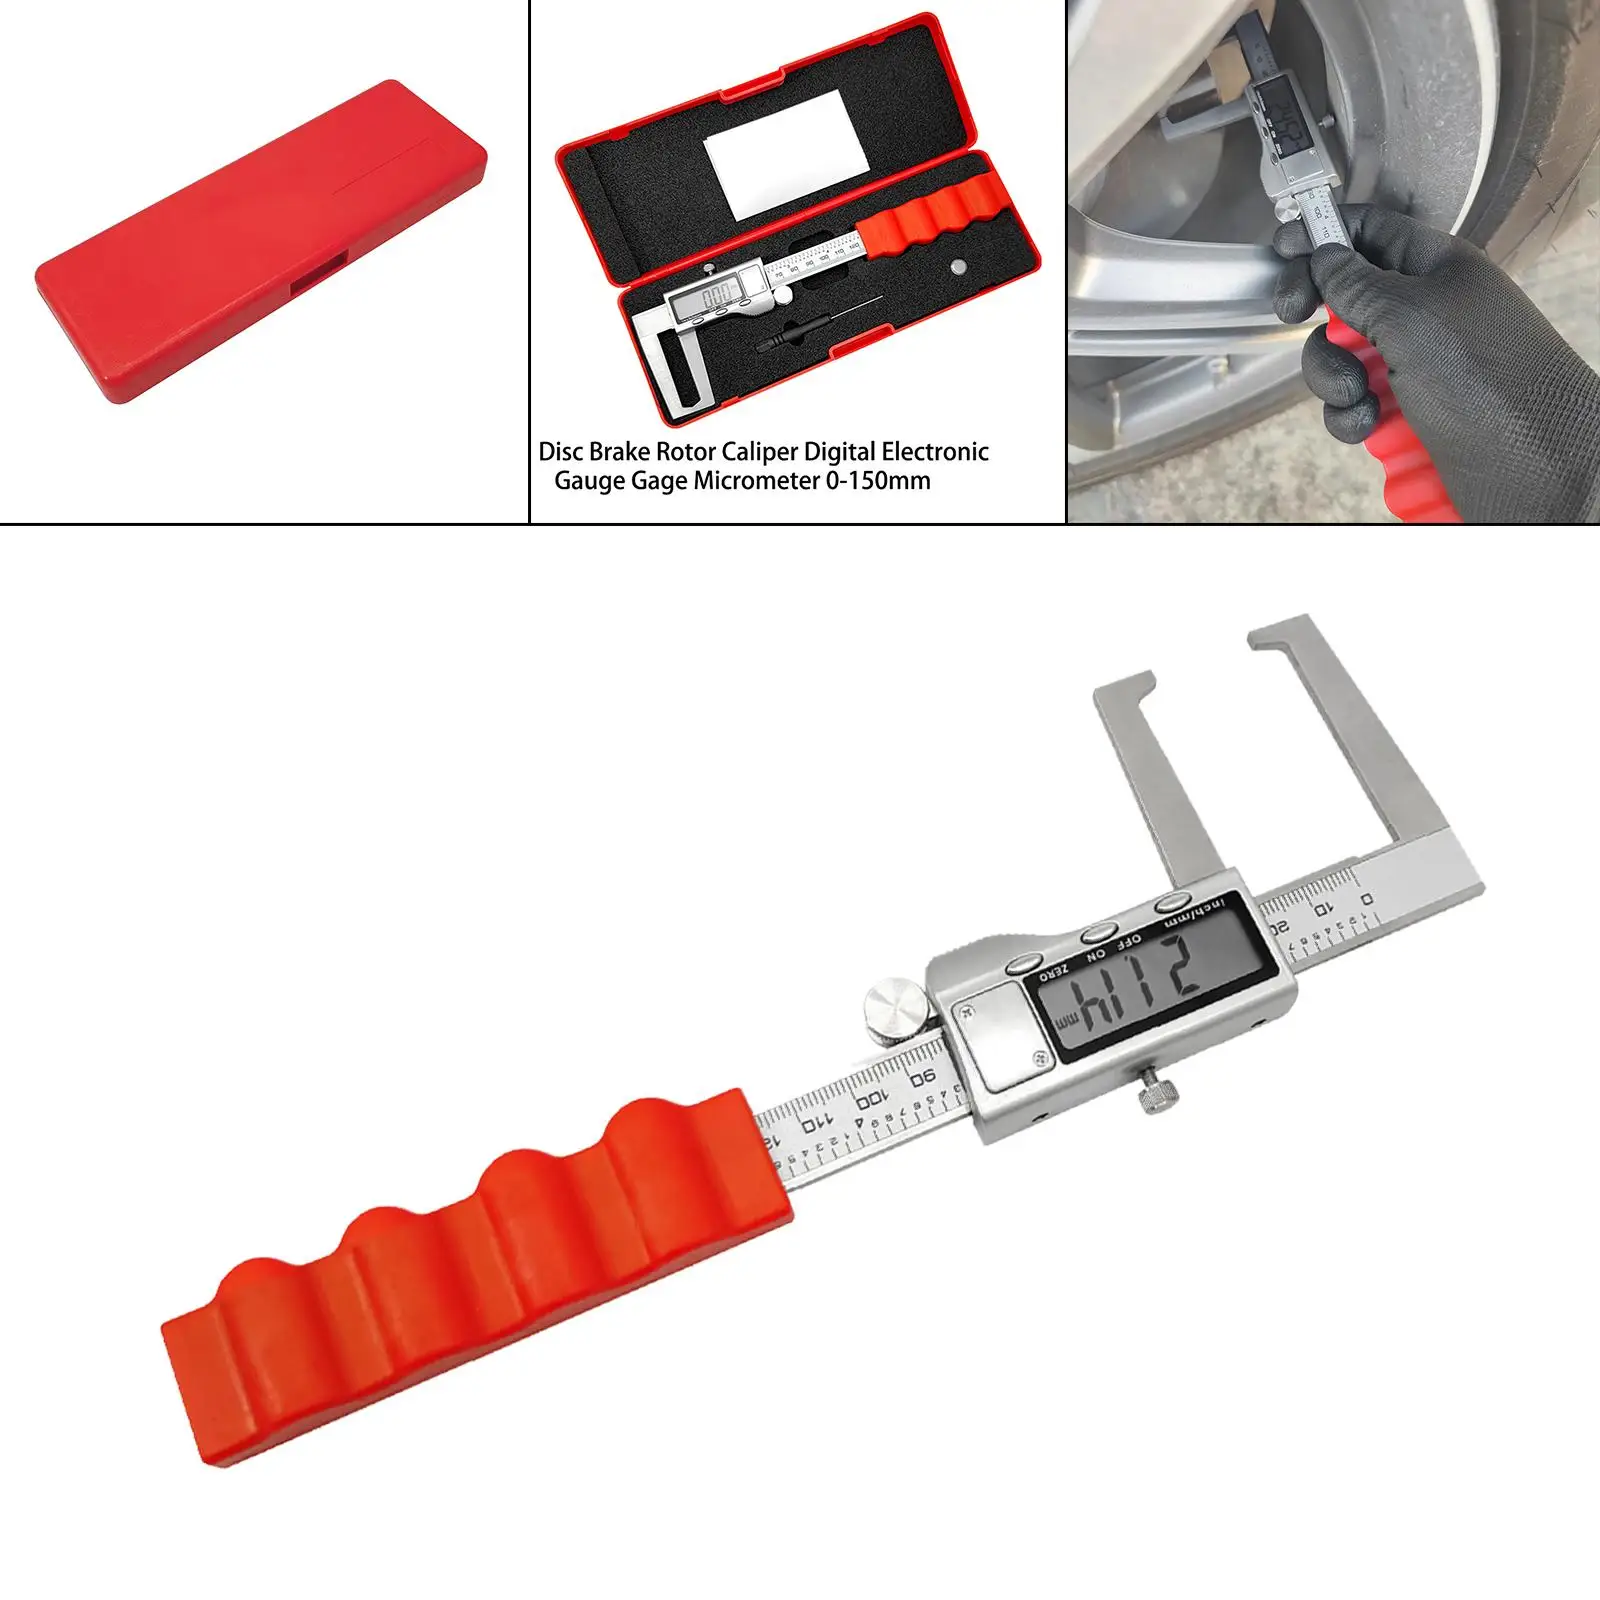 Quality Brake Discs Vernier Caliper Electronic Gauge Gage Detection Tool